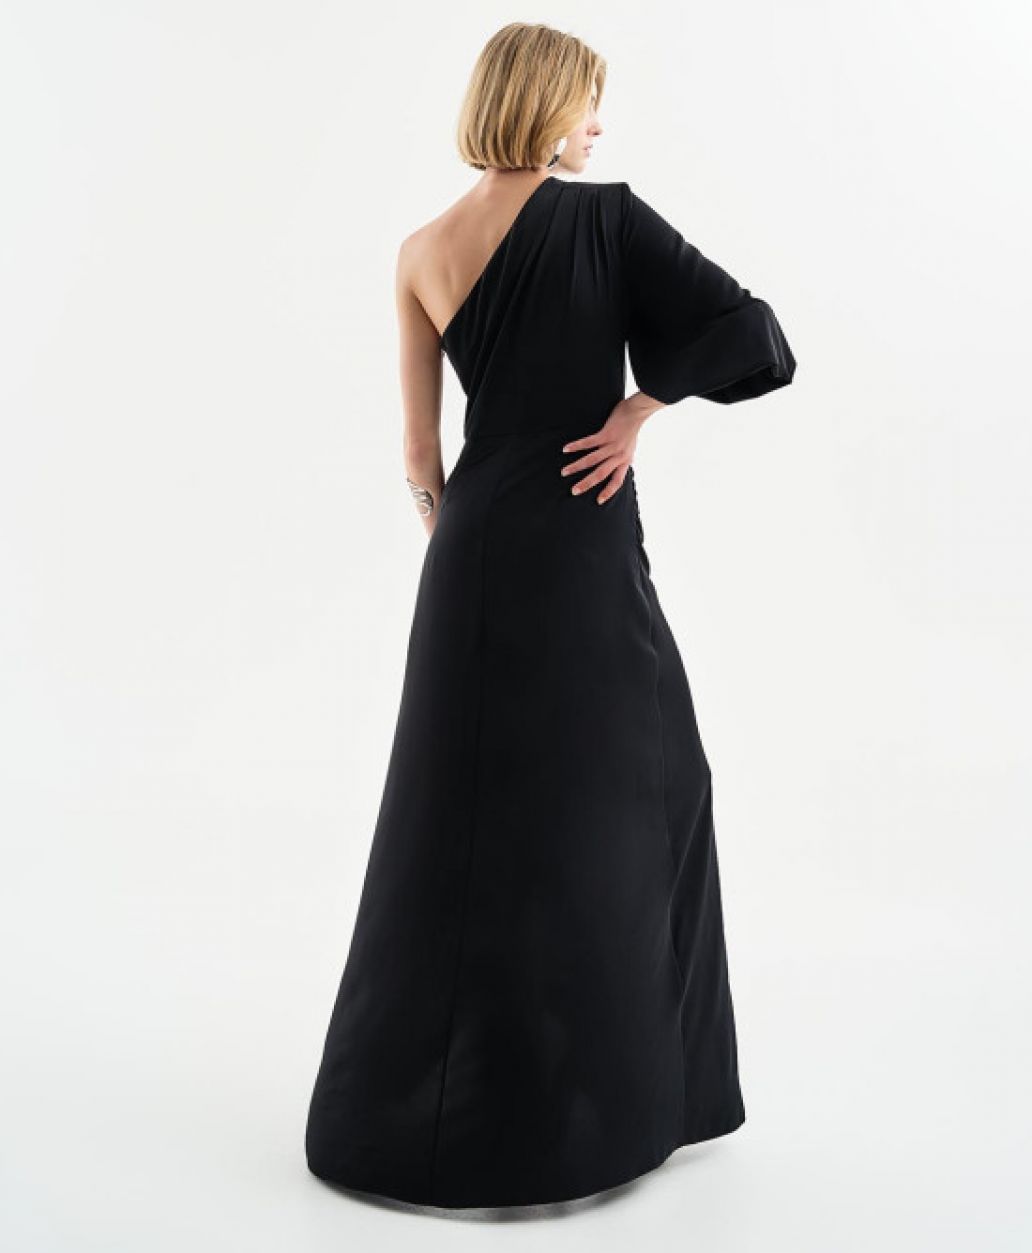 Acces One-Shoulder Dress Black